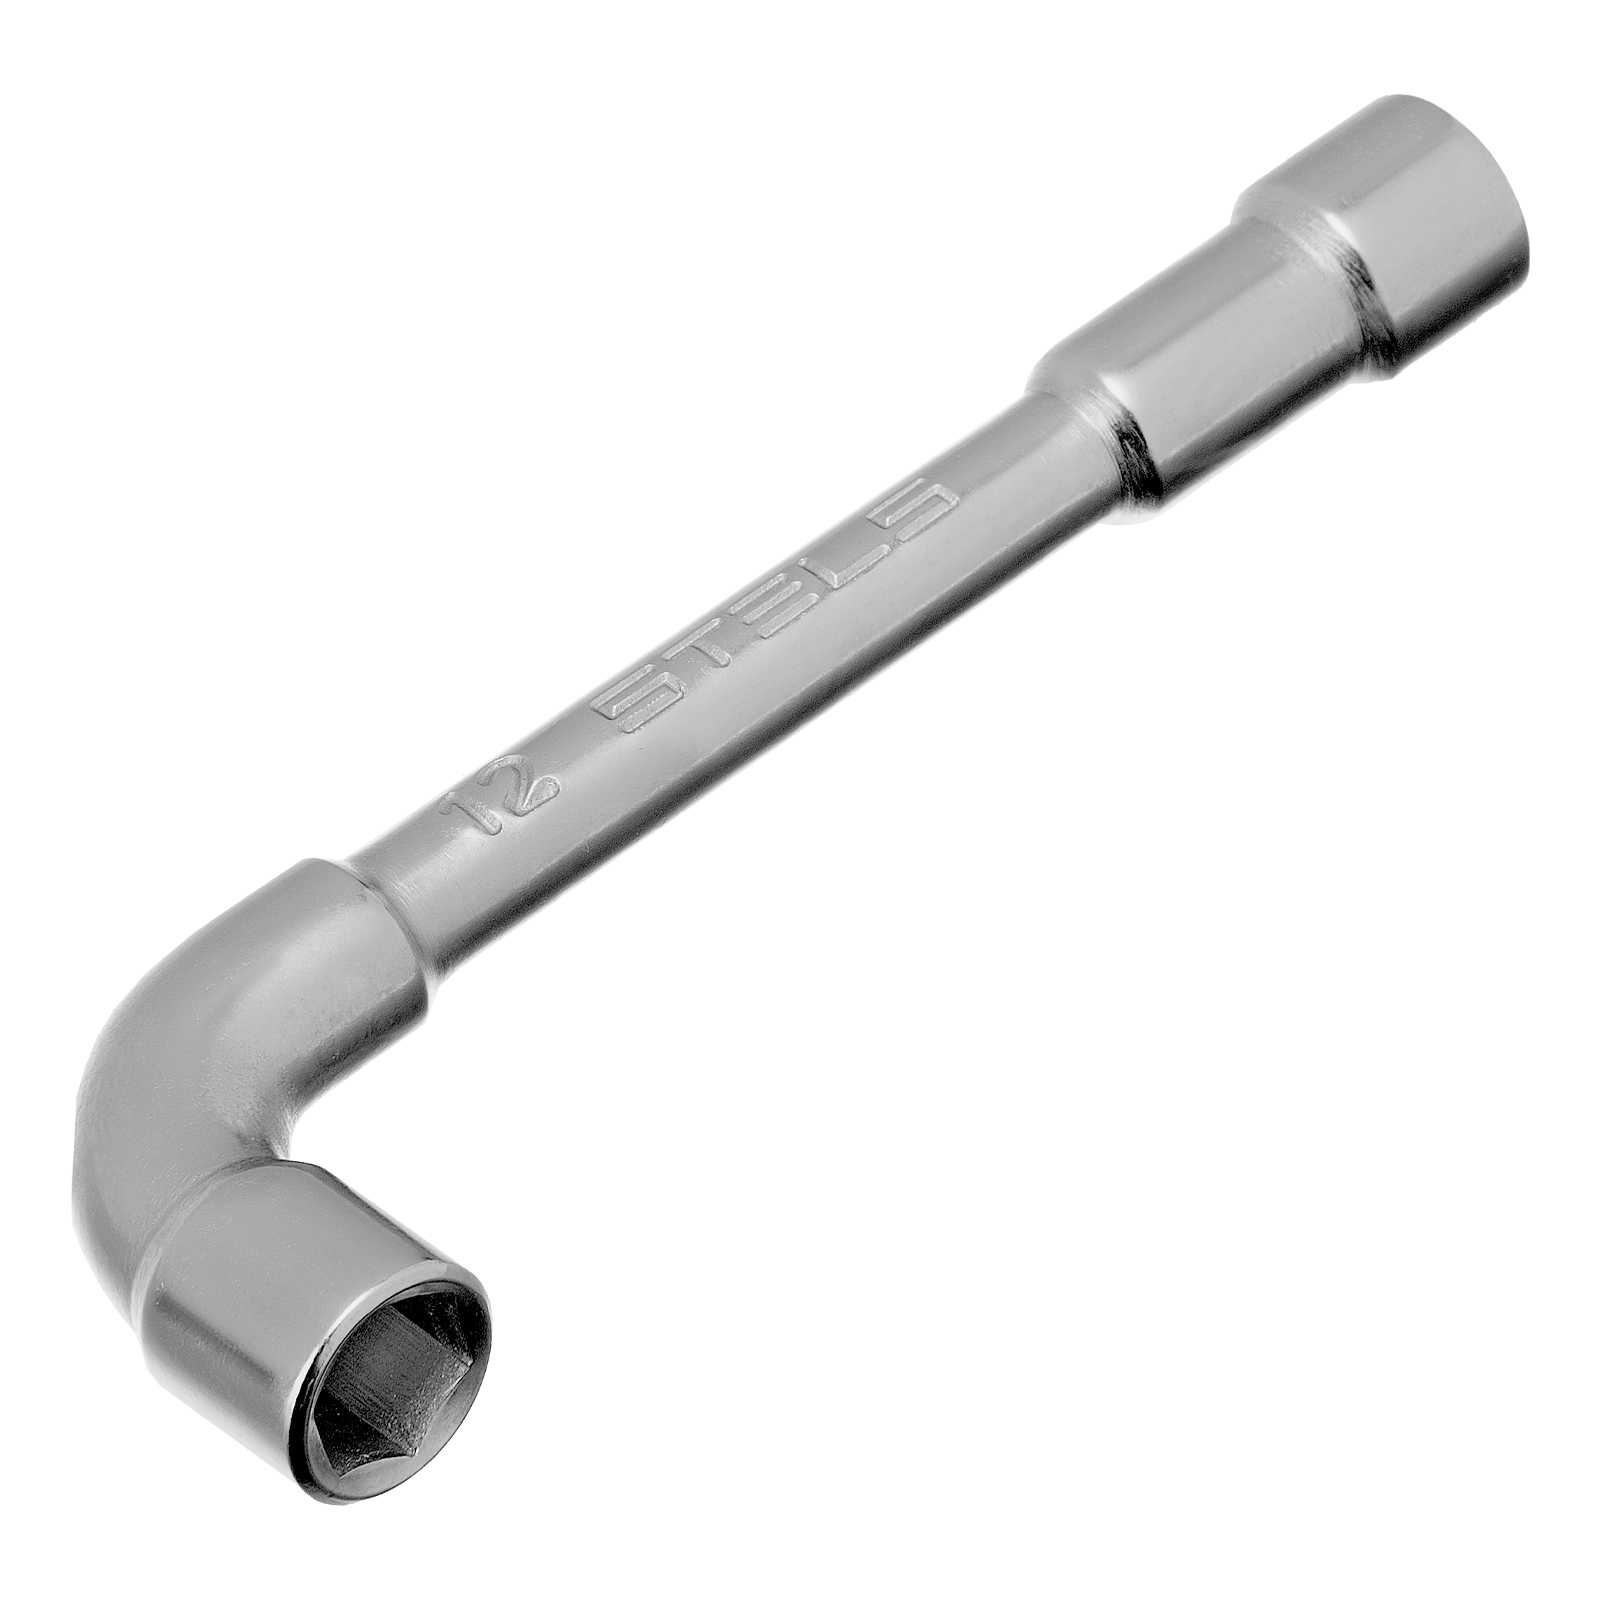 Торцевой трубчатый ключ STELS 14233 торцевой трубчатый ключ stels 14241